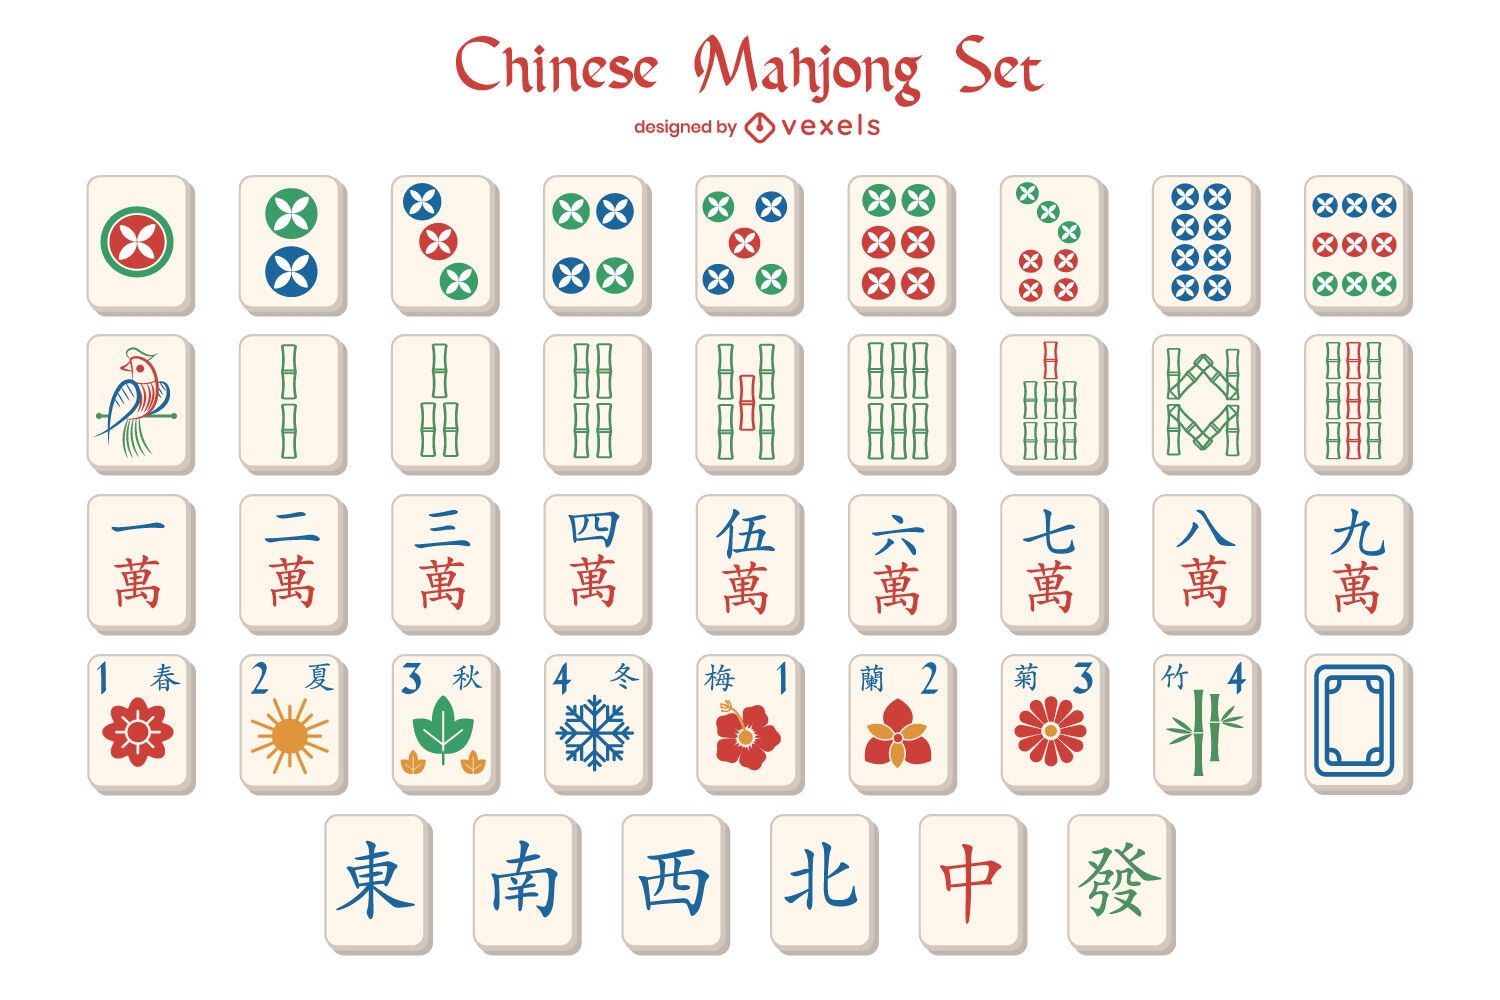 Conjunto de pe?as de s?mbolos do jogo chin?s Mahjong